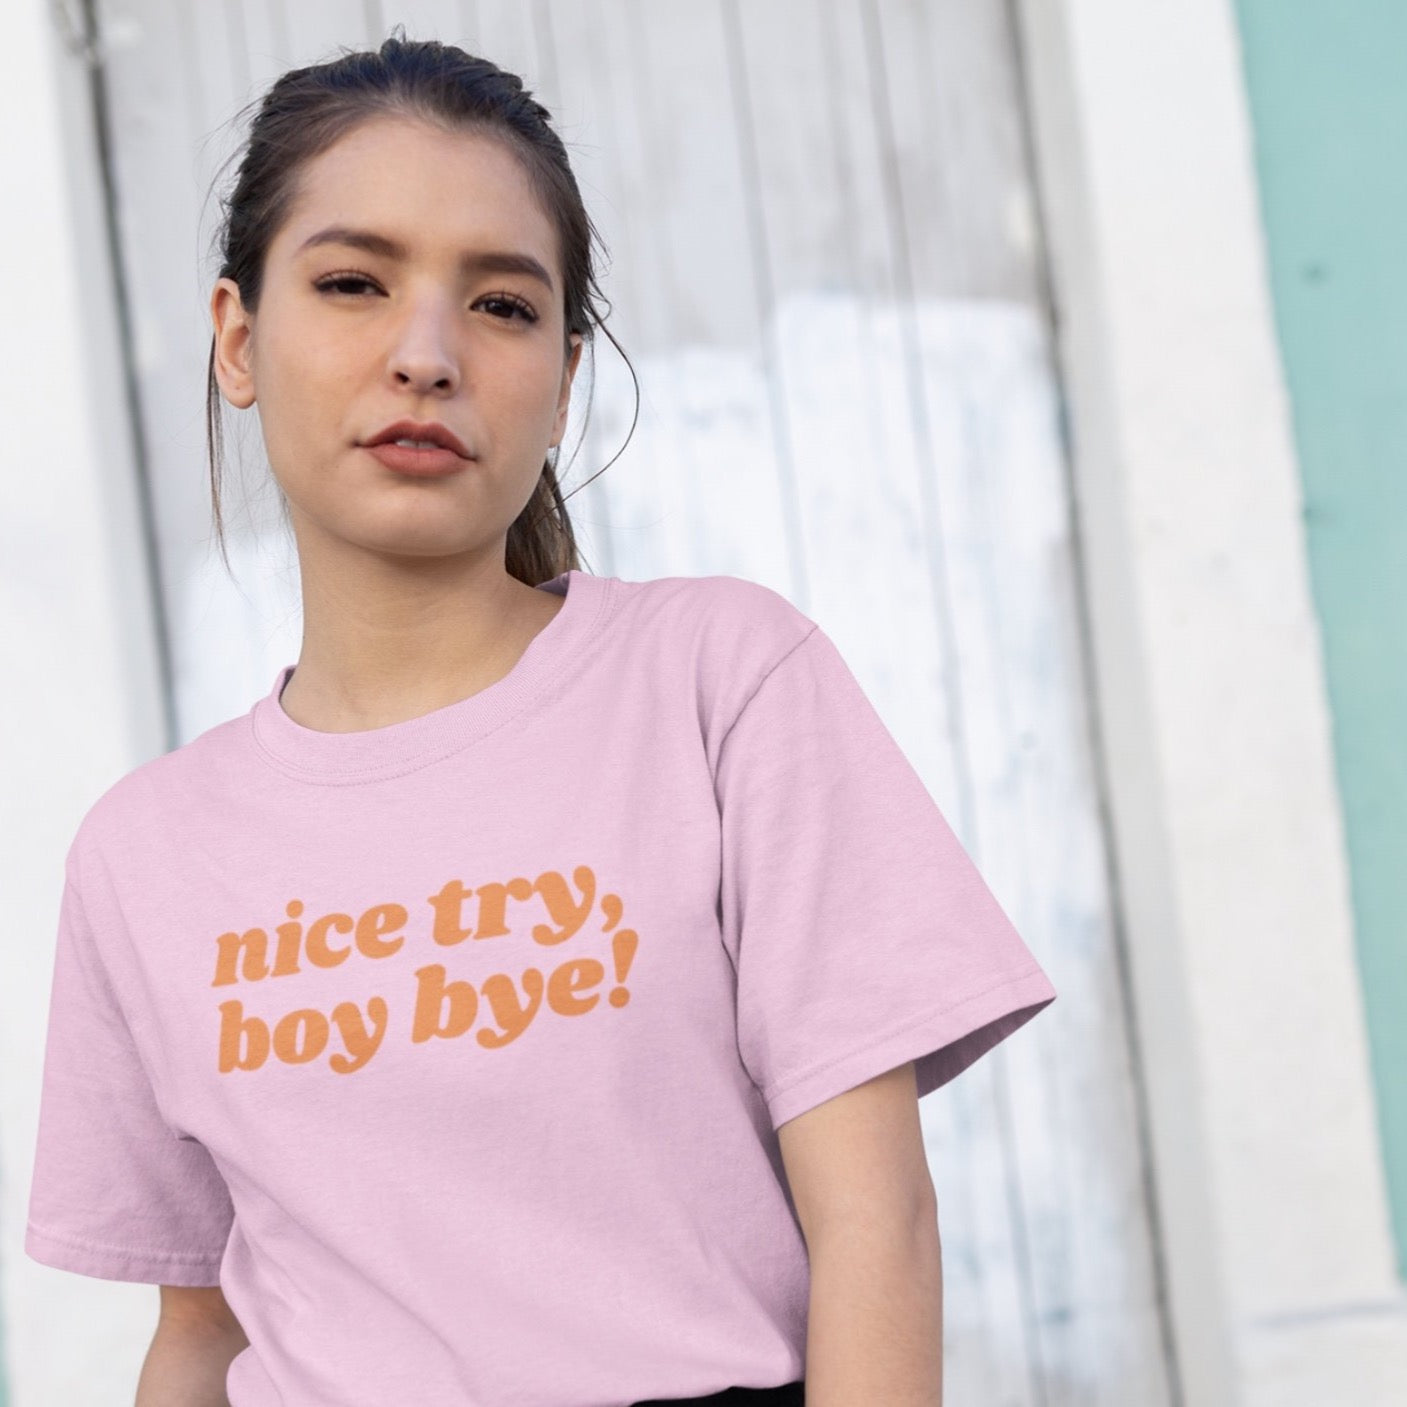 Nice Try Boy Bye! Feminist T-Shirt - Feminist Trash Store - Shop Women’s Rights T-shirts